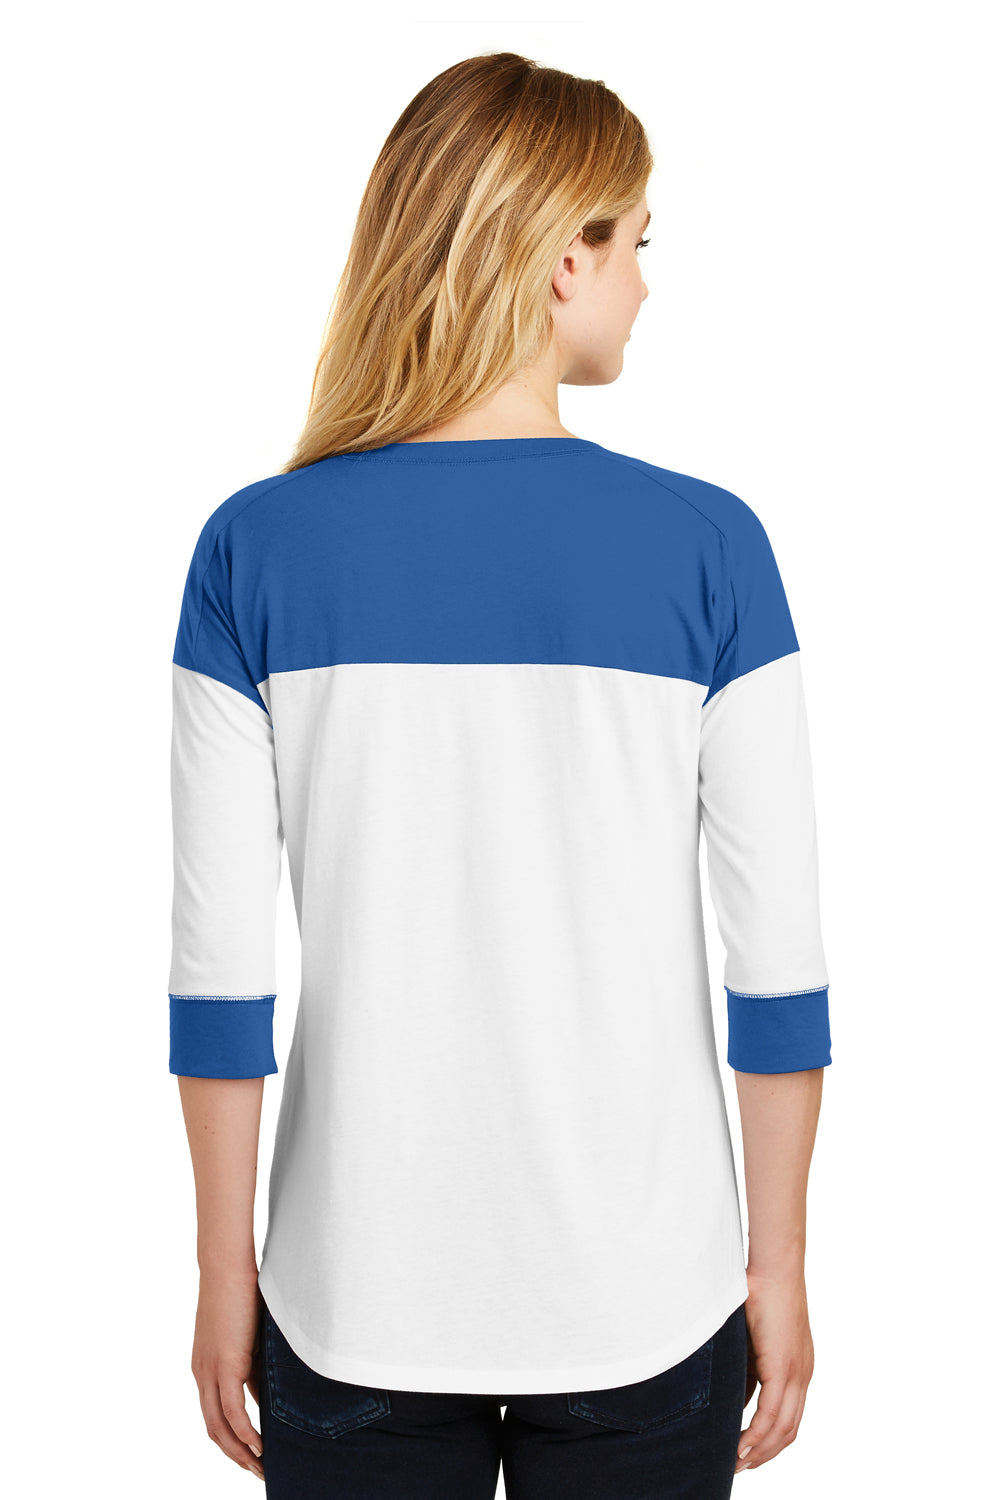 New Era LNEA104 Womens Heritage 3/4 Sleeve Crewneck T-Shirt Royal Blue/White Back